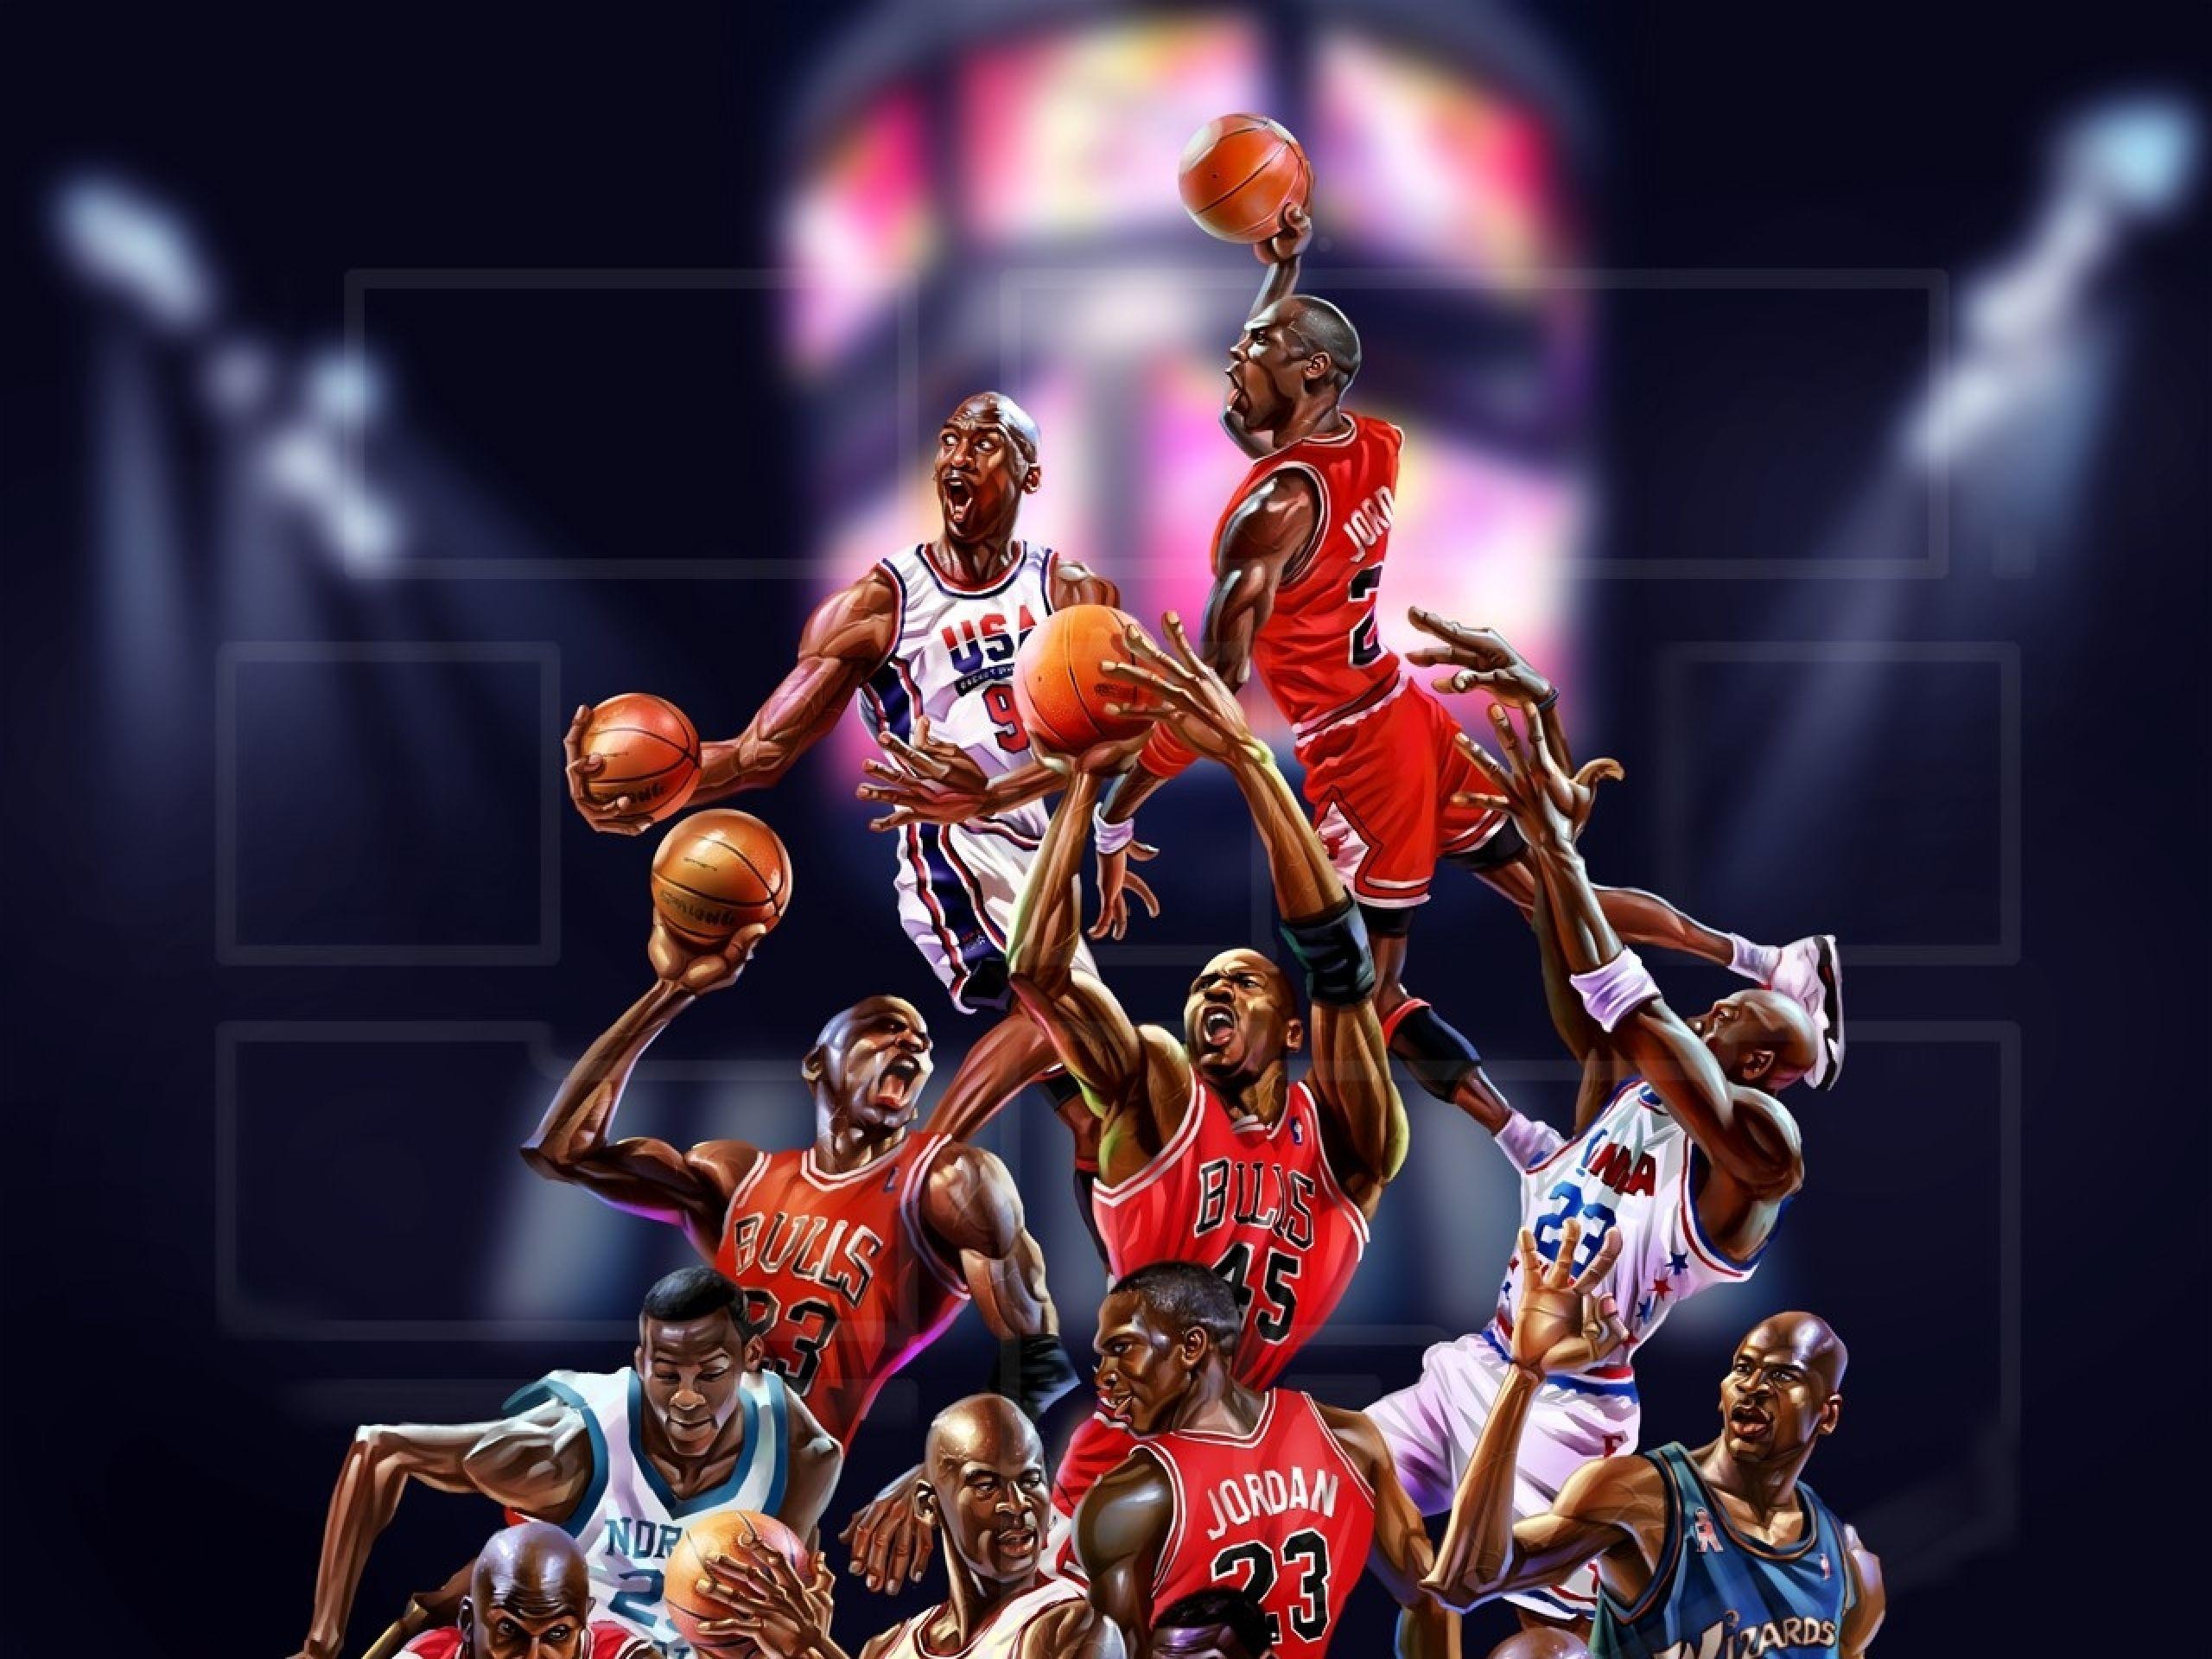 NBA Wallpaper Free NBA Background